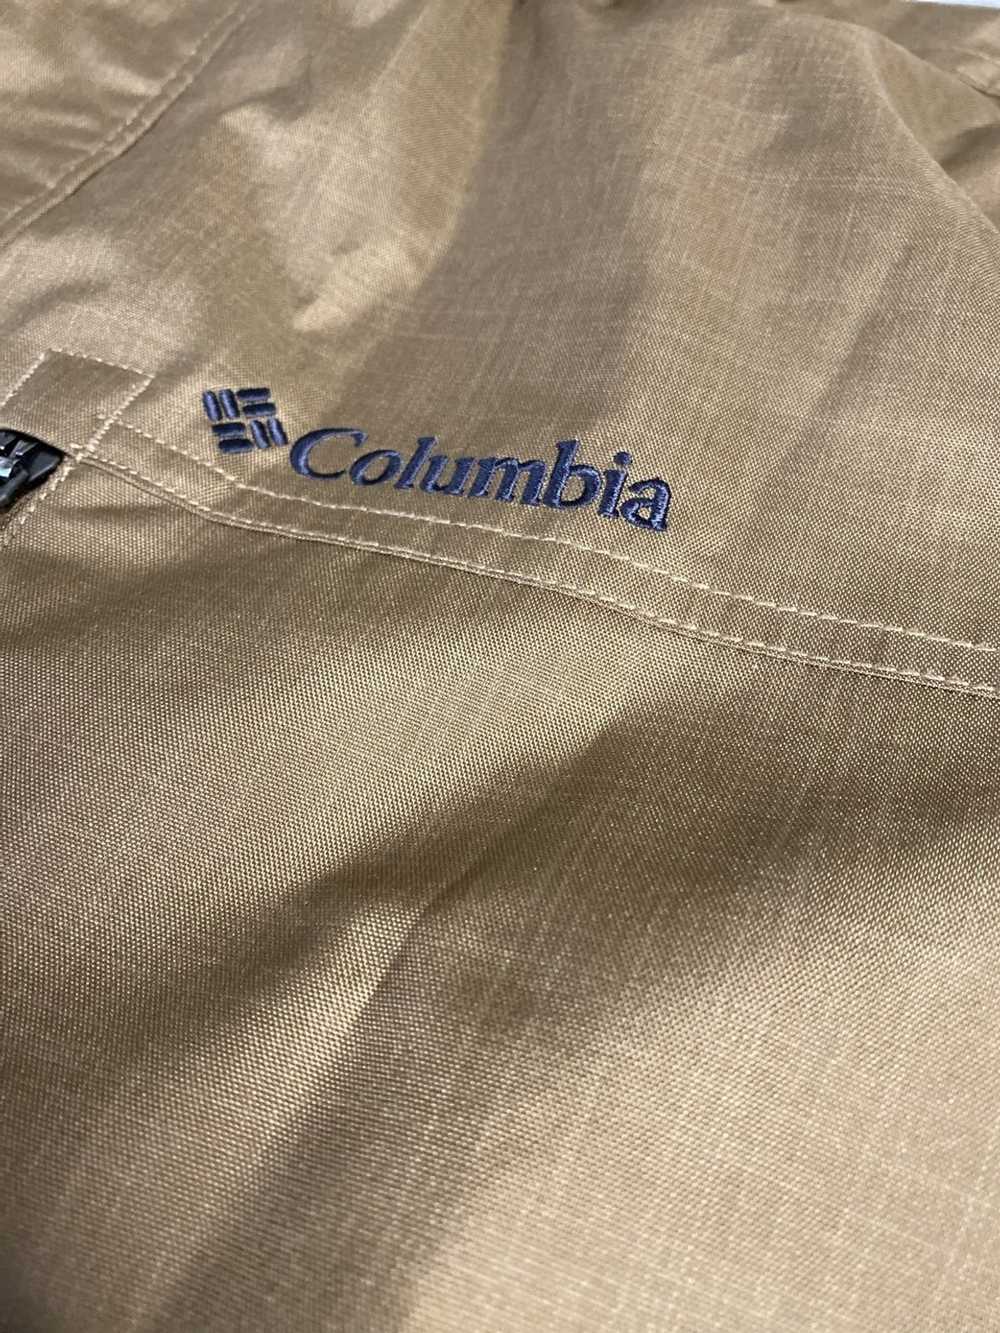 Columbia Columbia raincoat/wind breaker - image 6